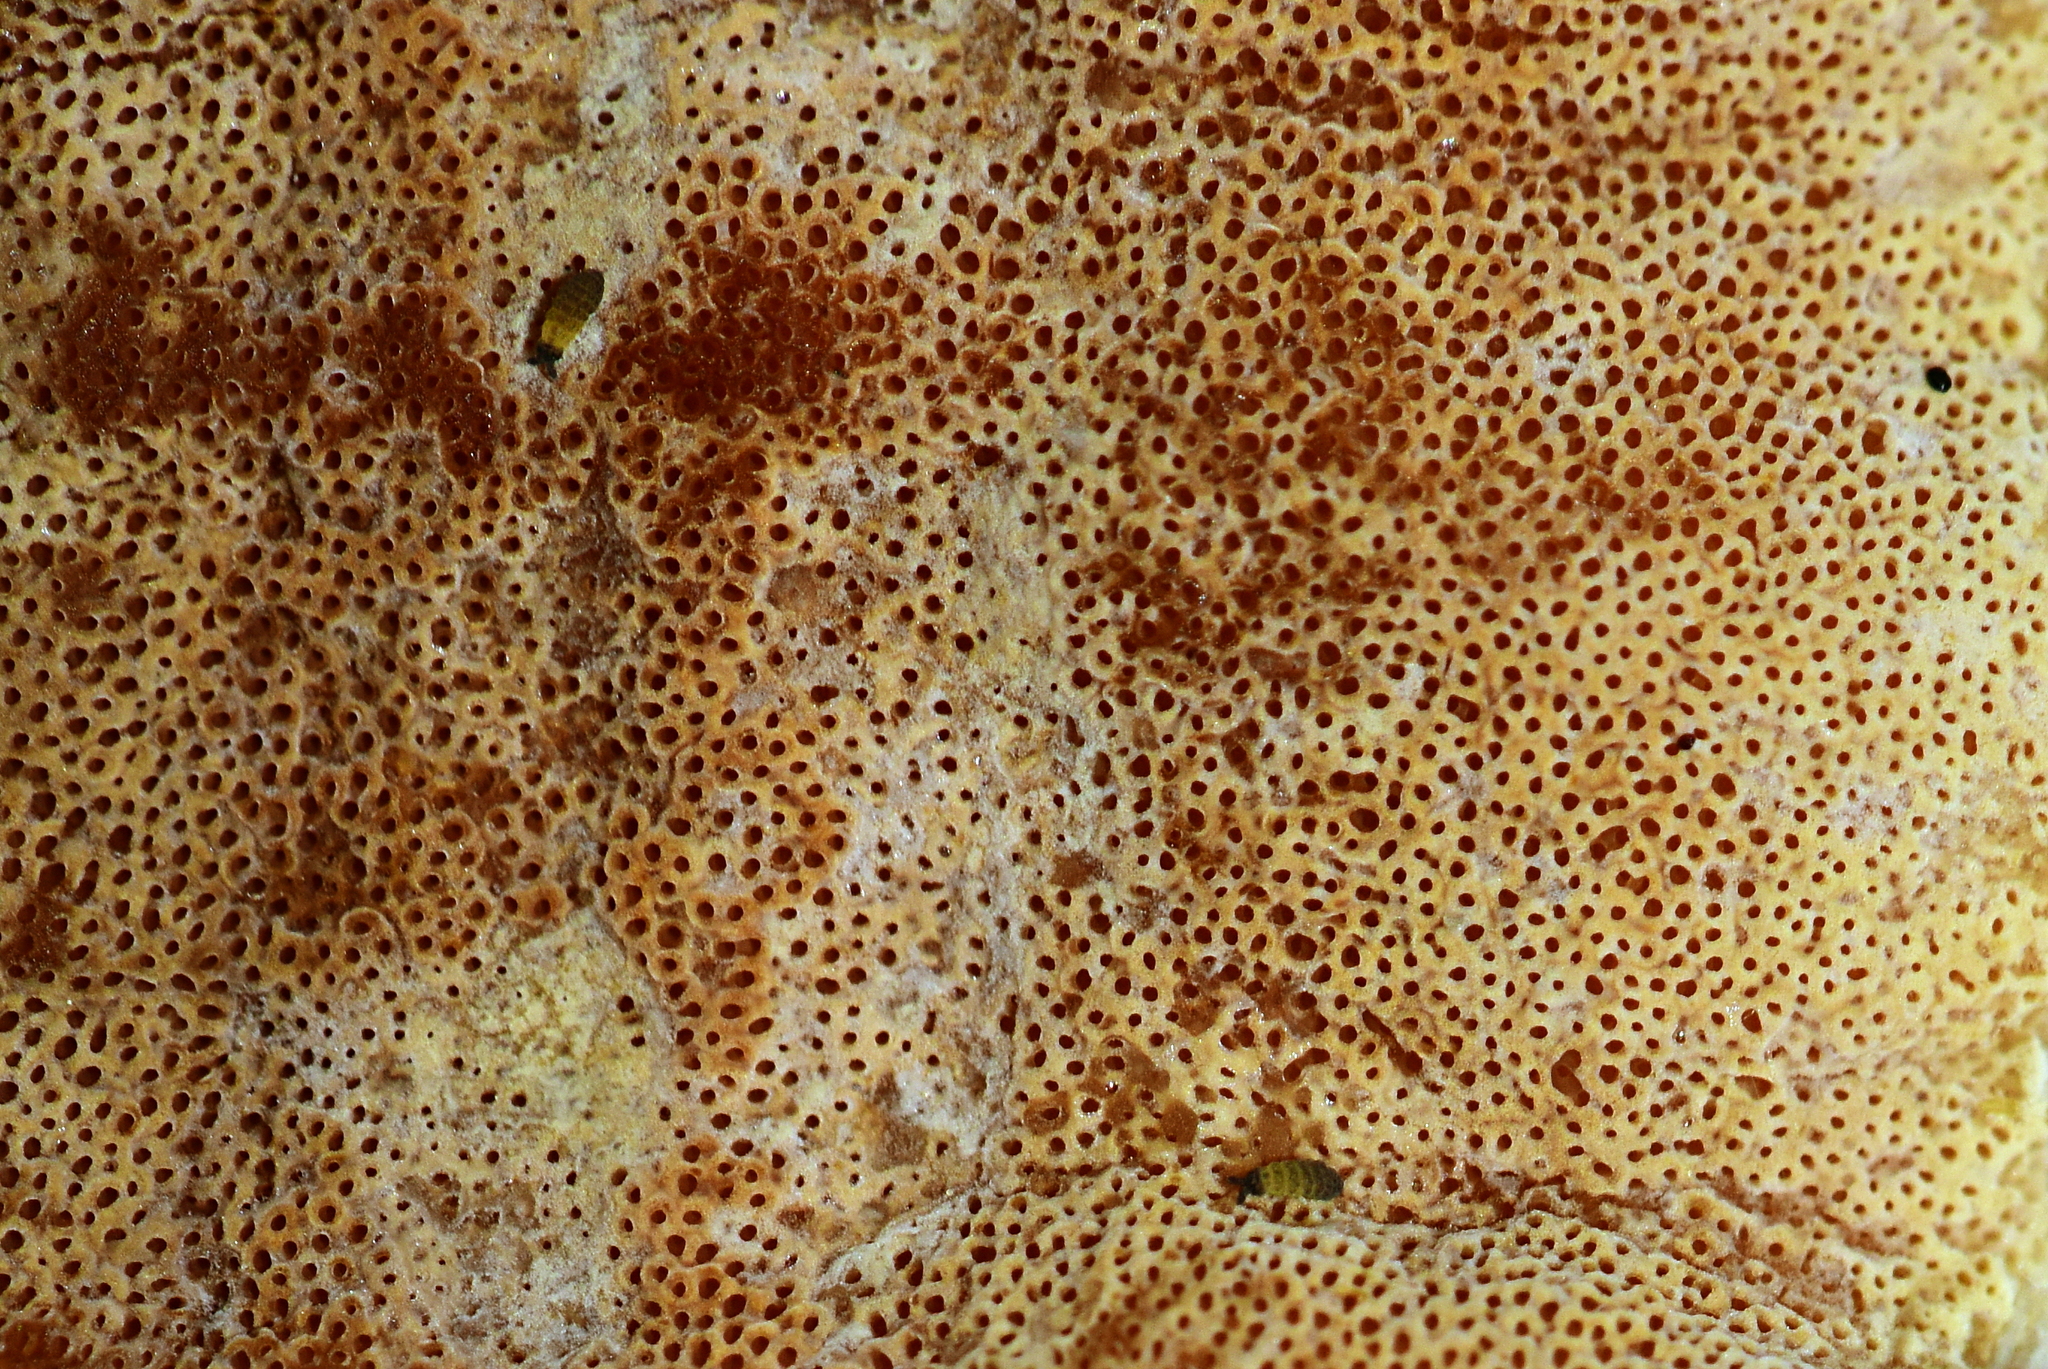 Gloeoporus image